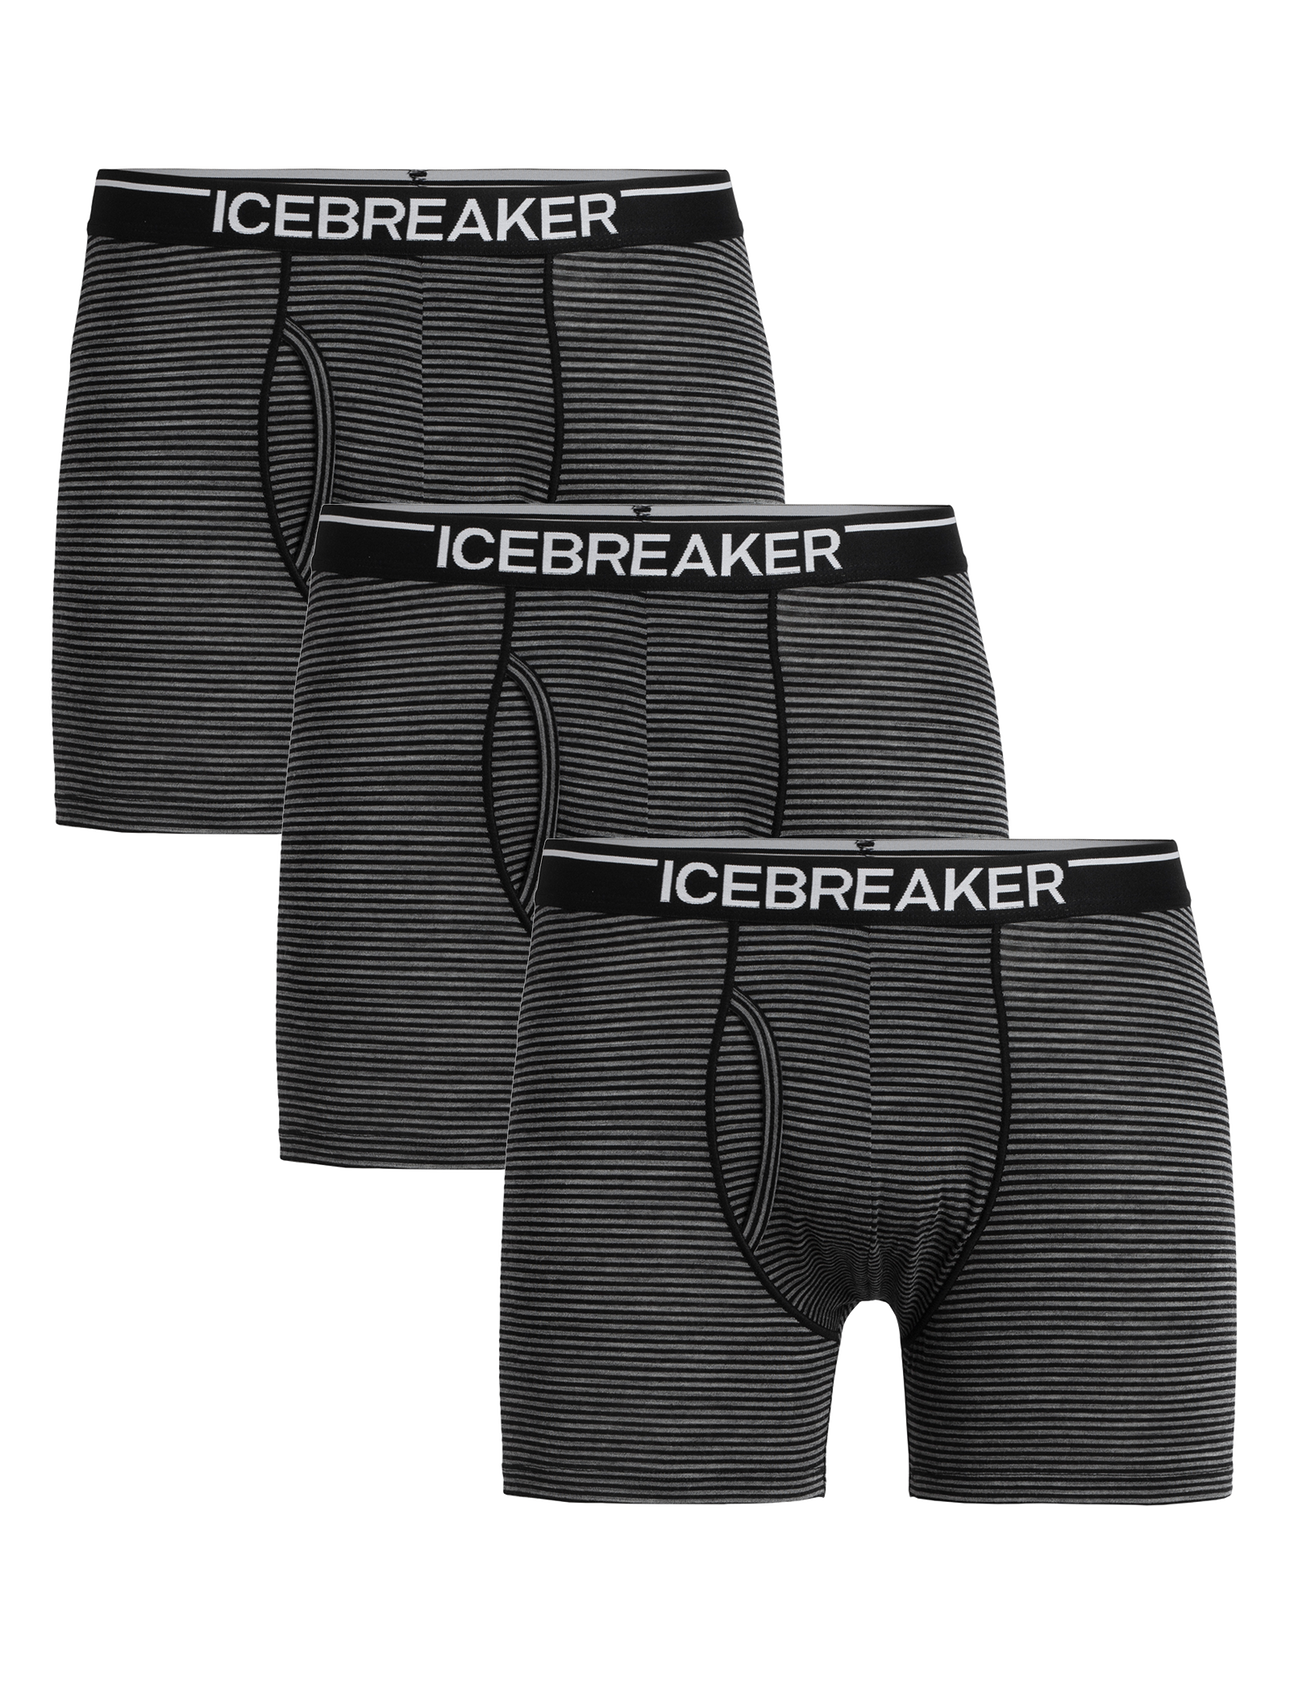 Icebreaker Merino - Men's Anatomica Boxers with Fly - Discounts